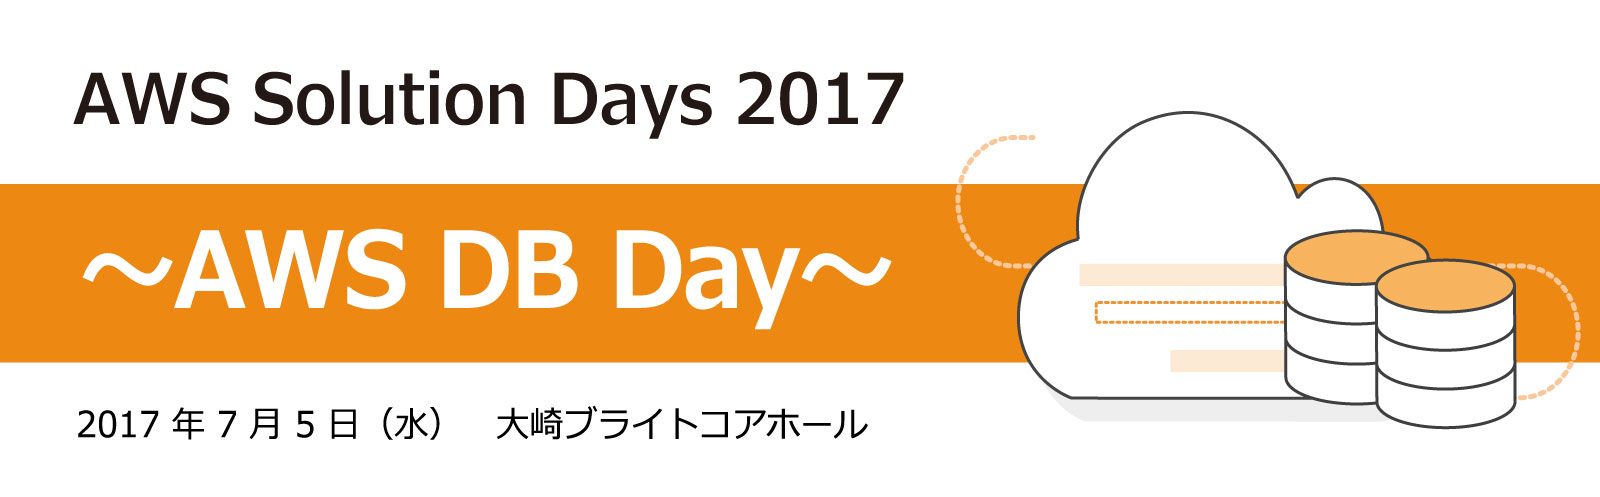 AWS Solution Days 2017 ~ AWS DB Day ~